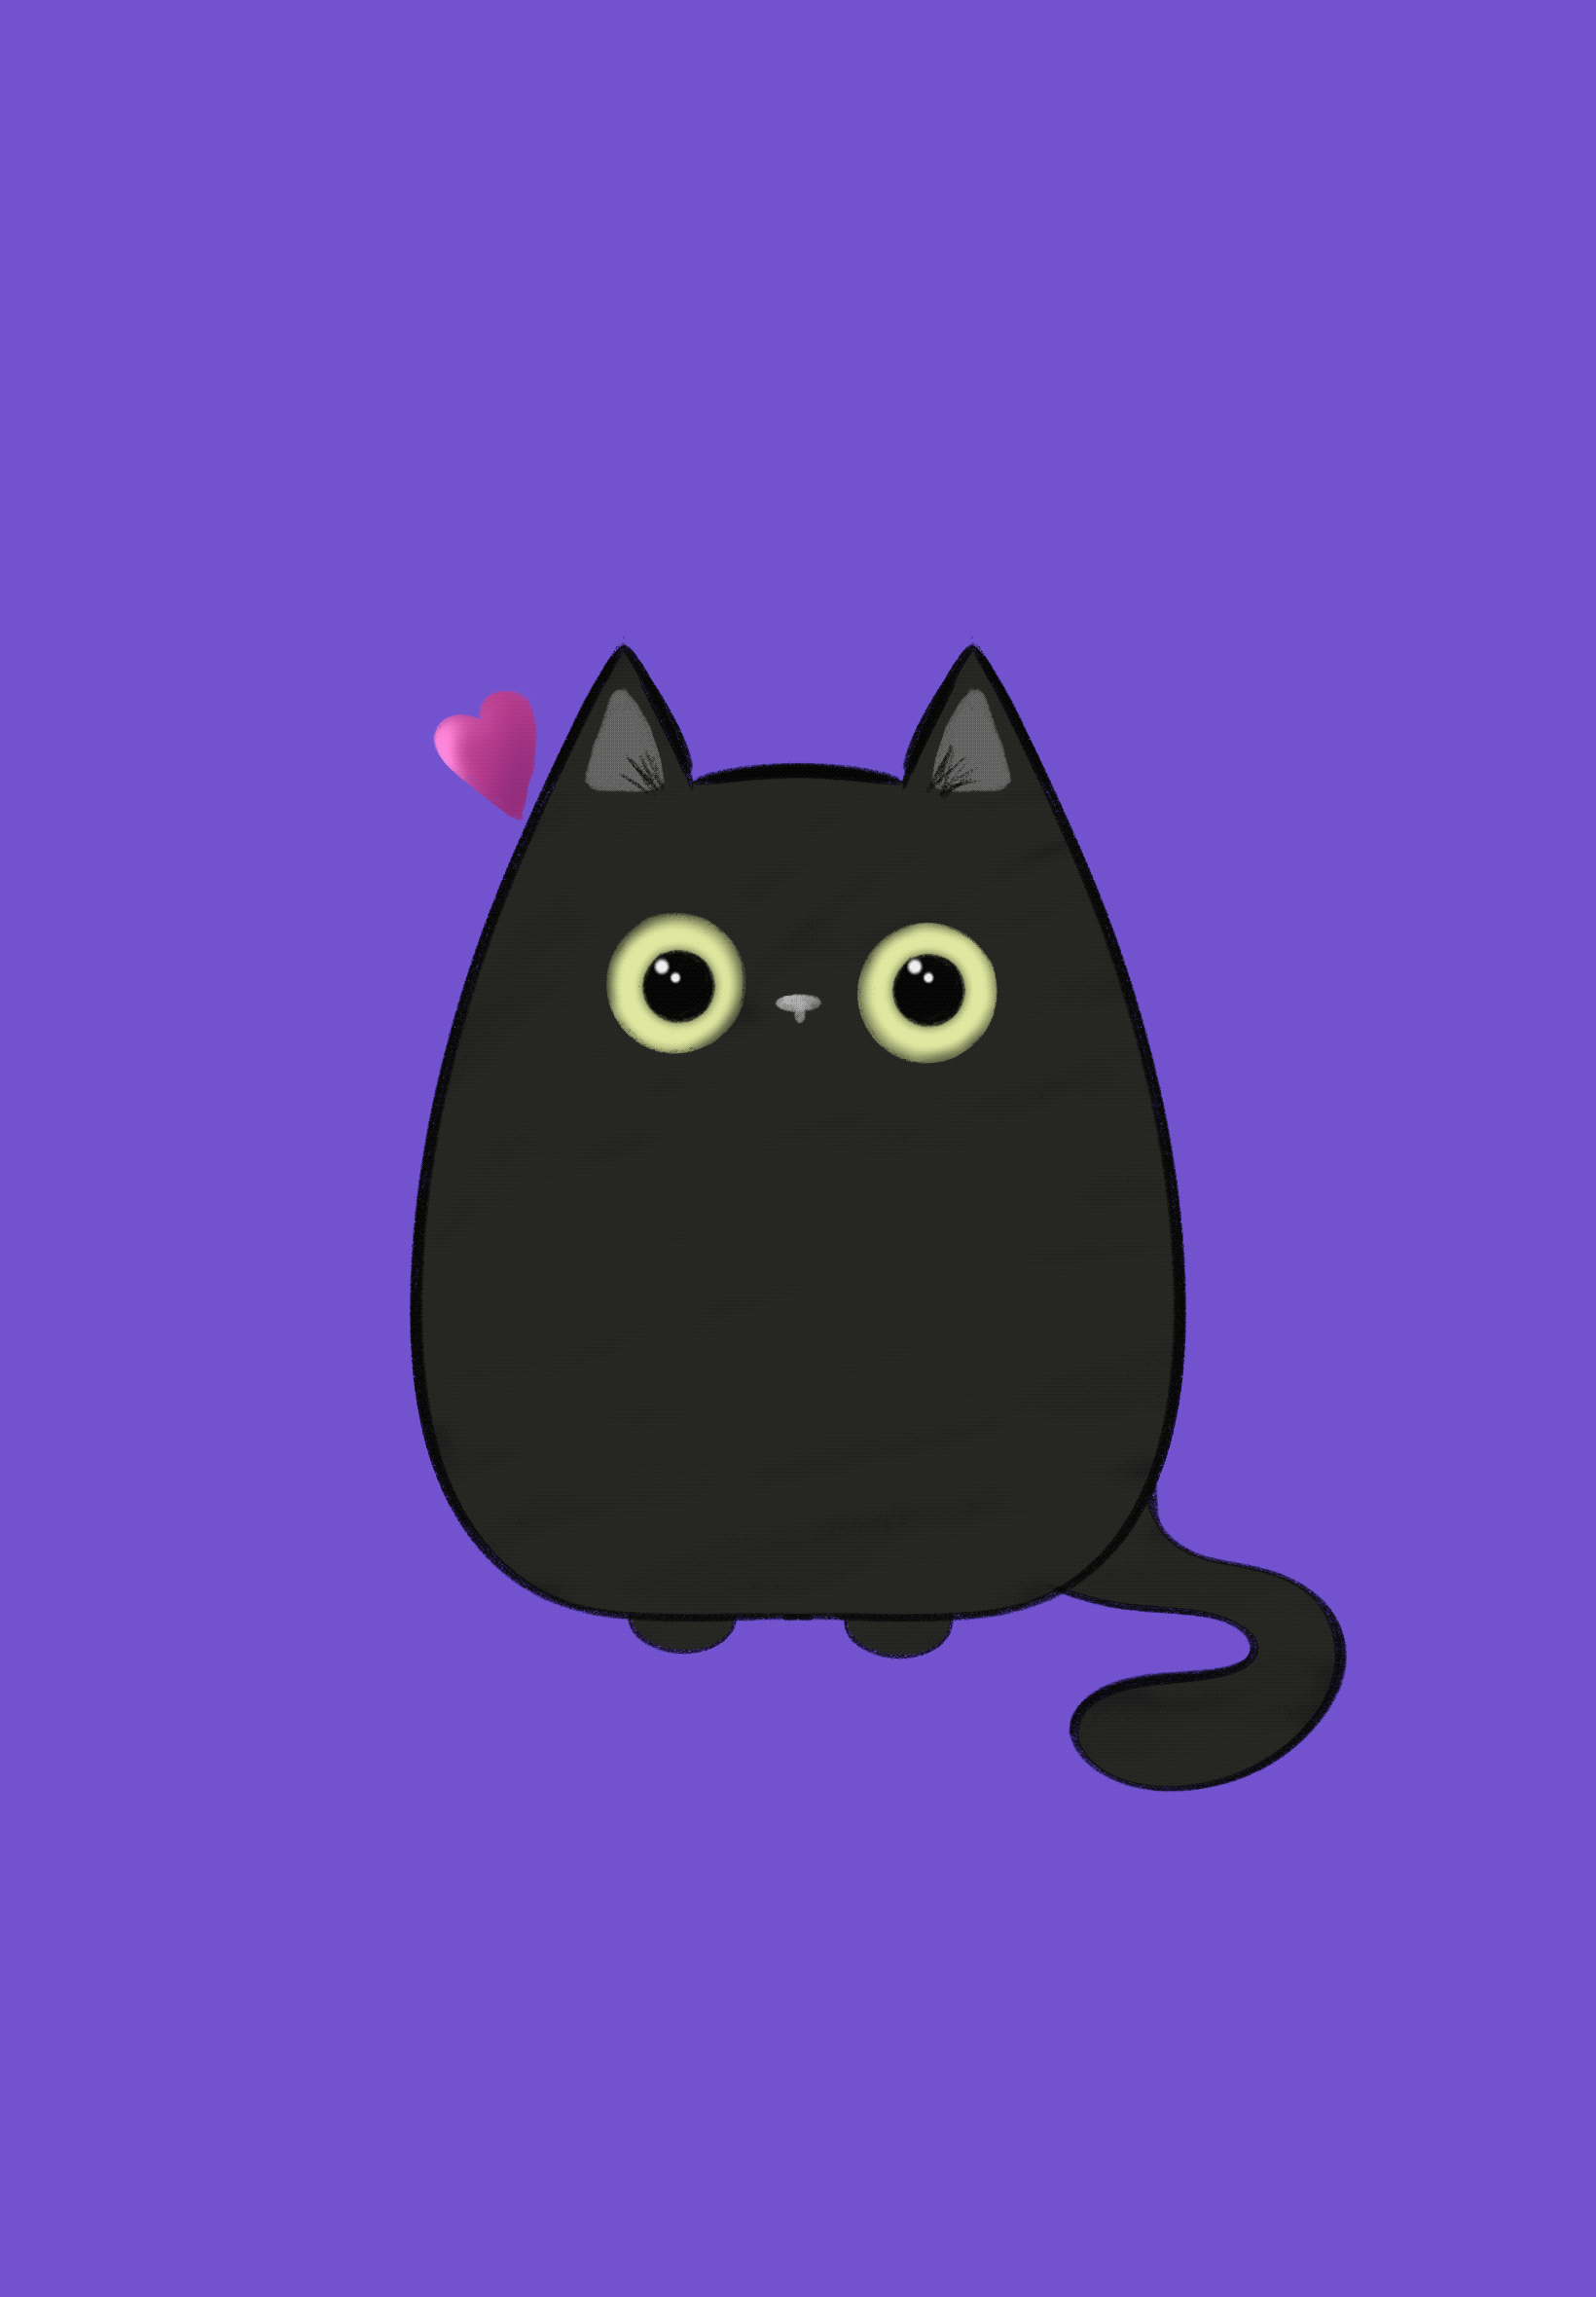 cute cat illustration sticker gif animation sticker loop fun whimsical